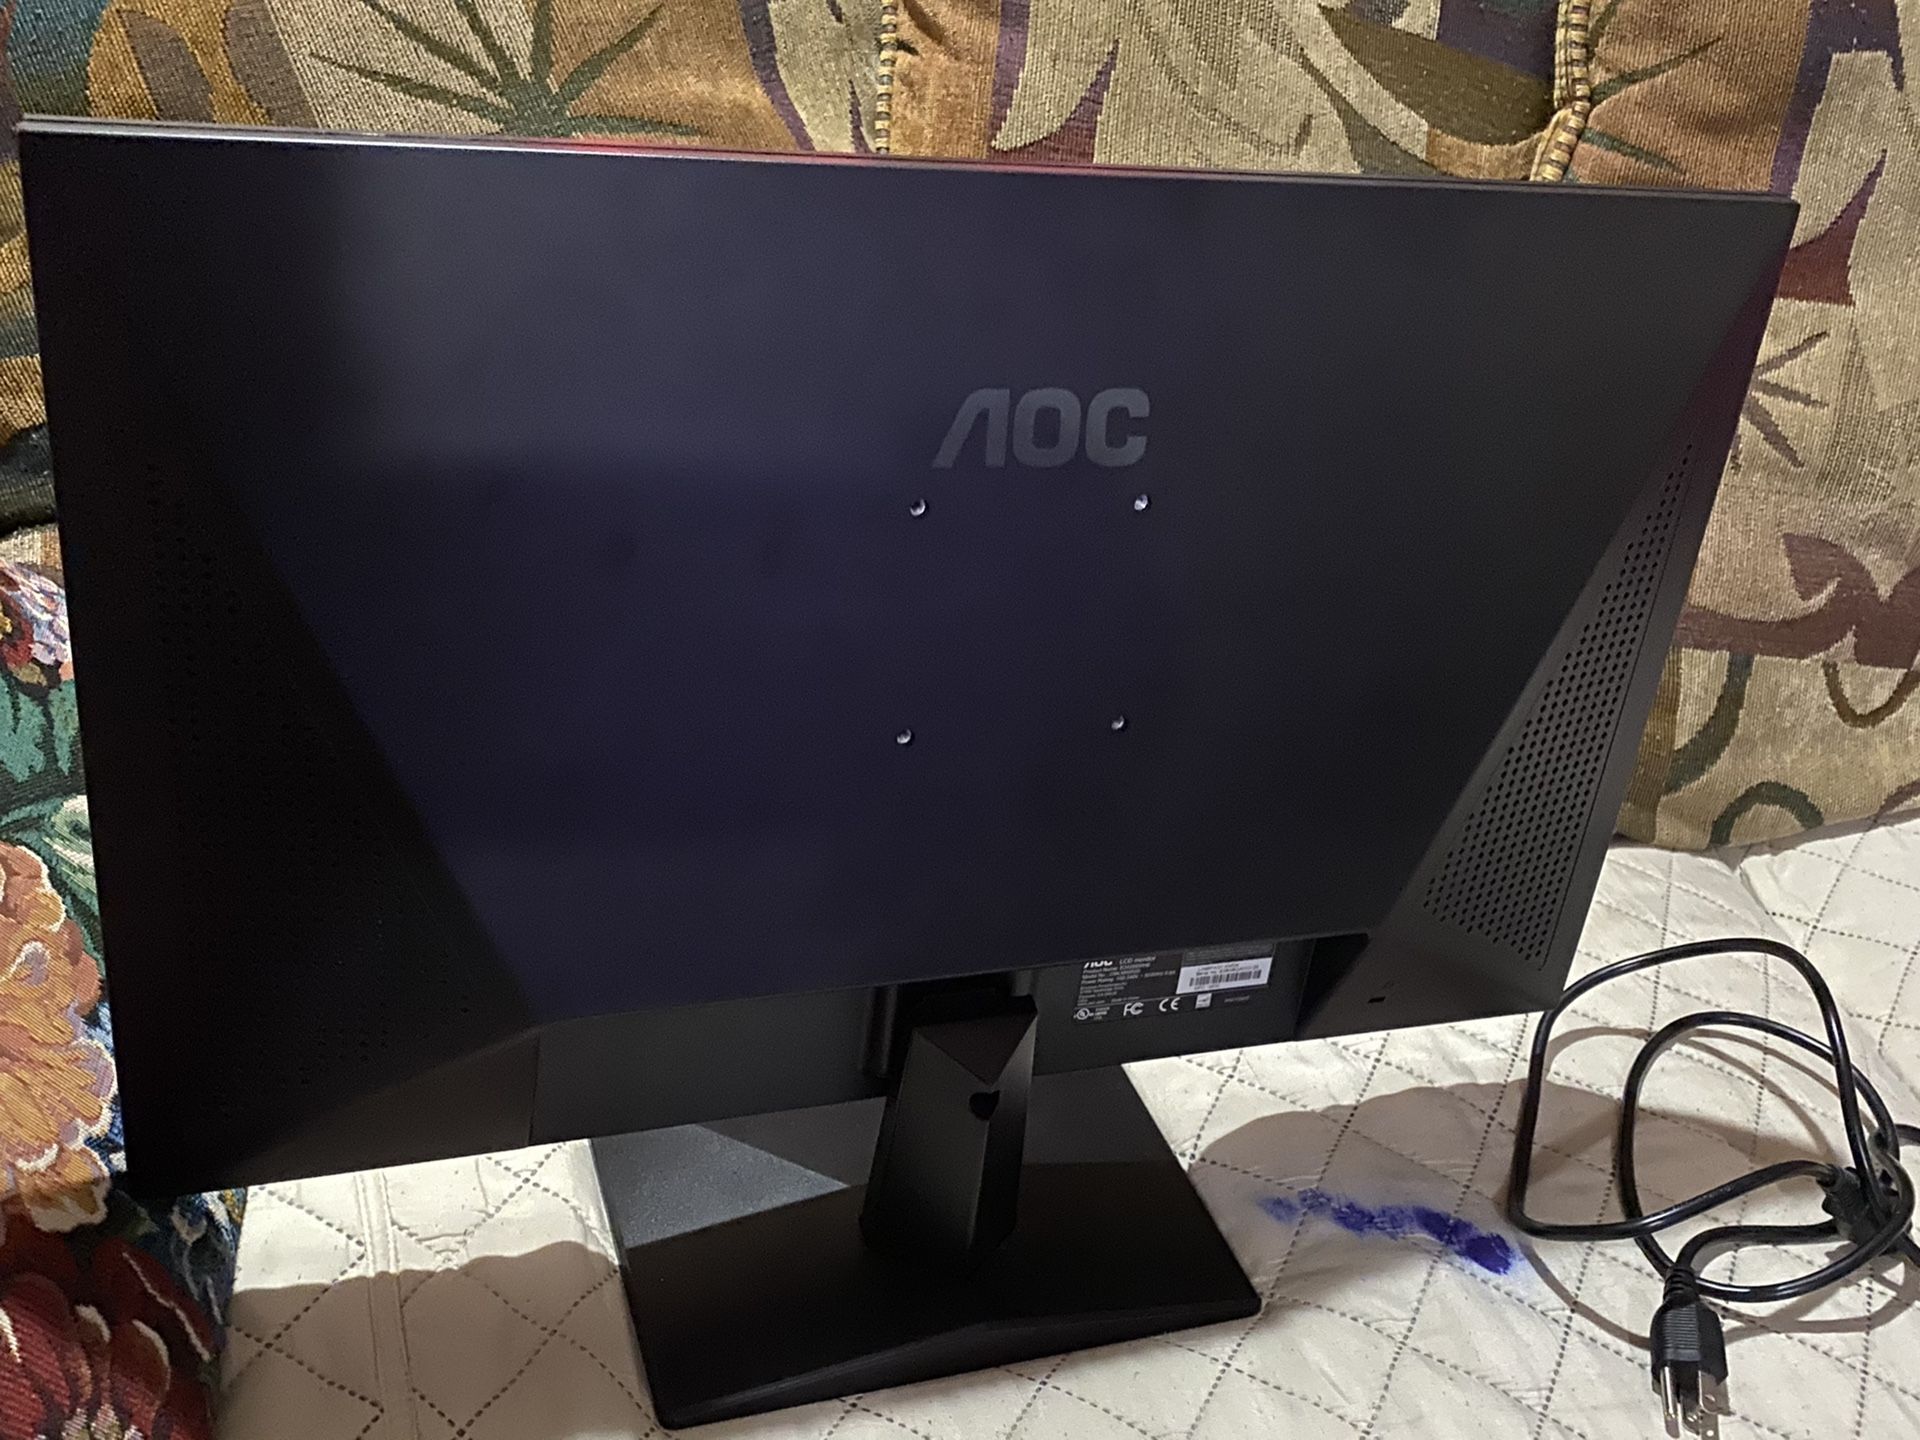 24 inch AOC monitor with HDMI port